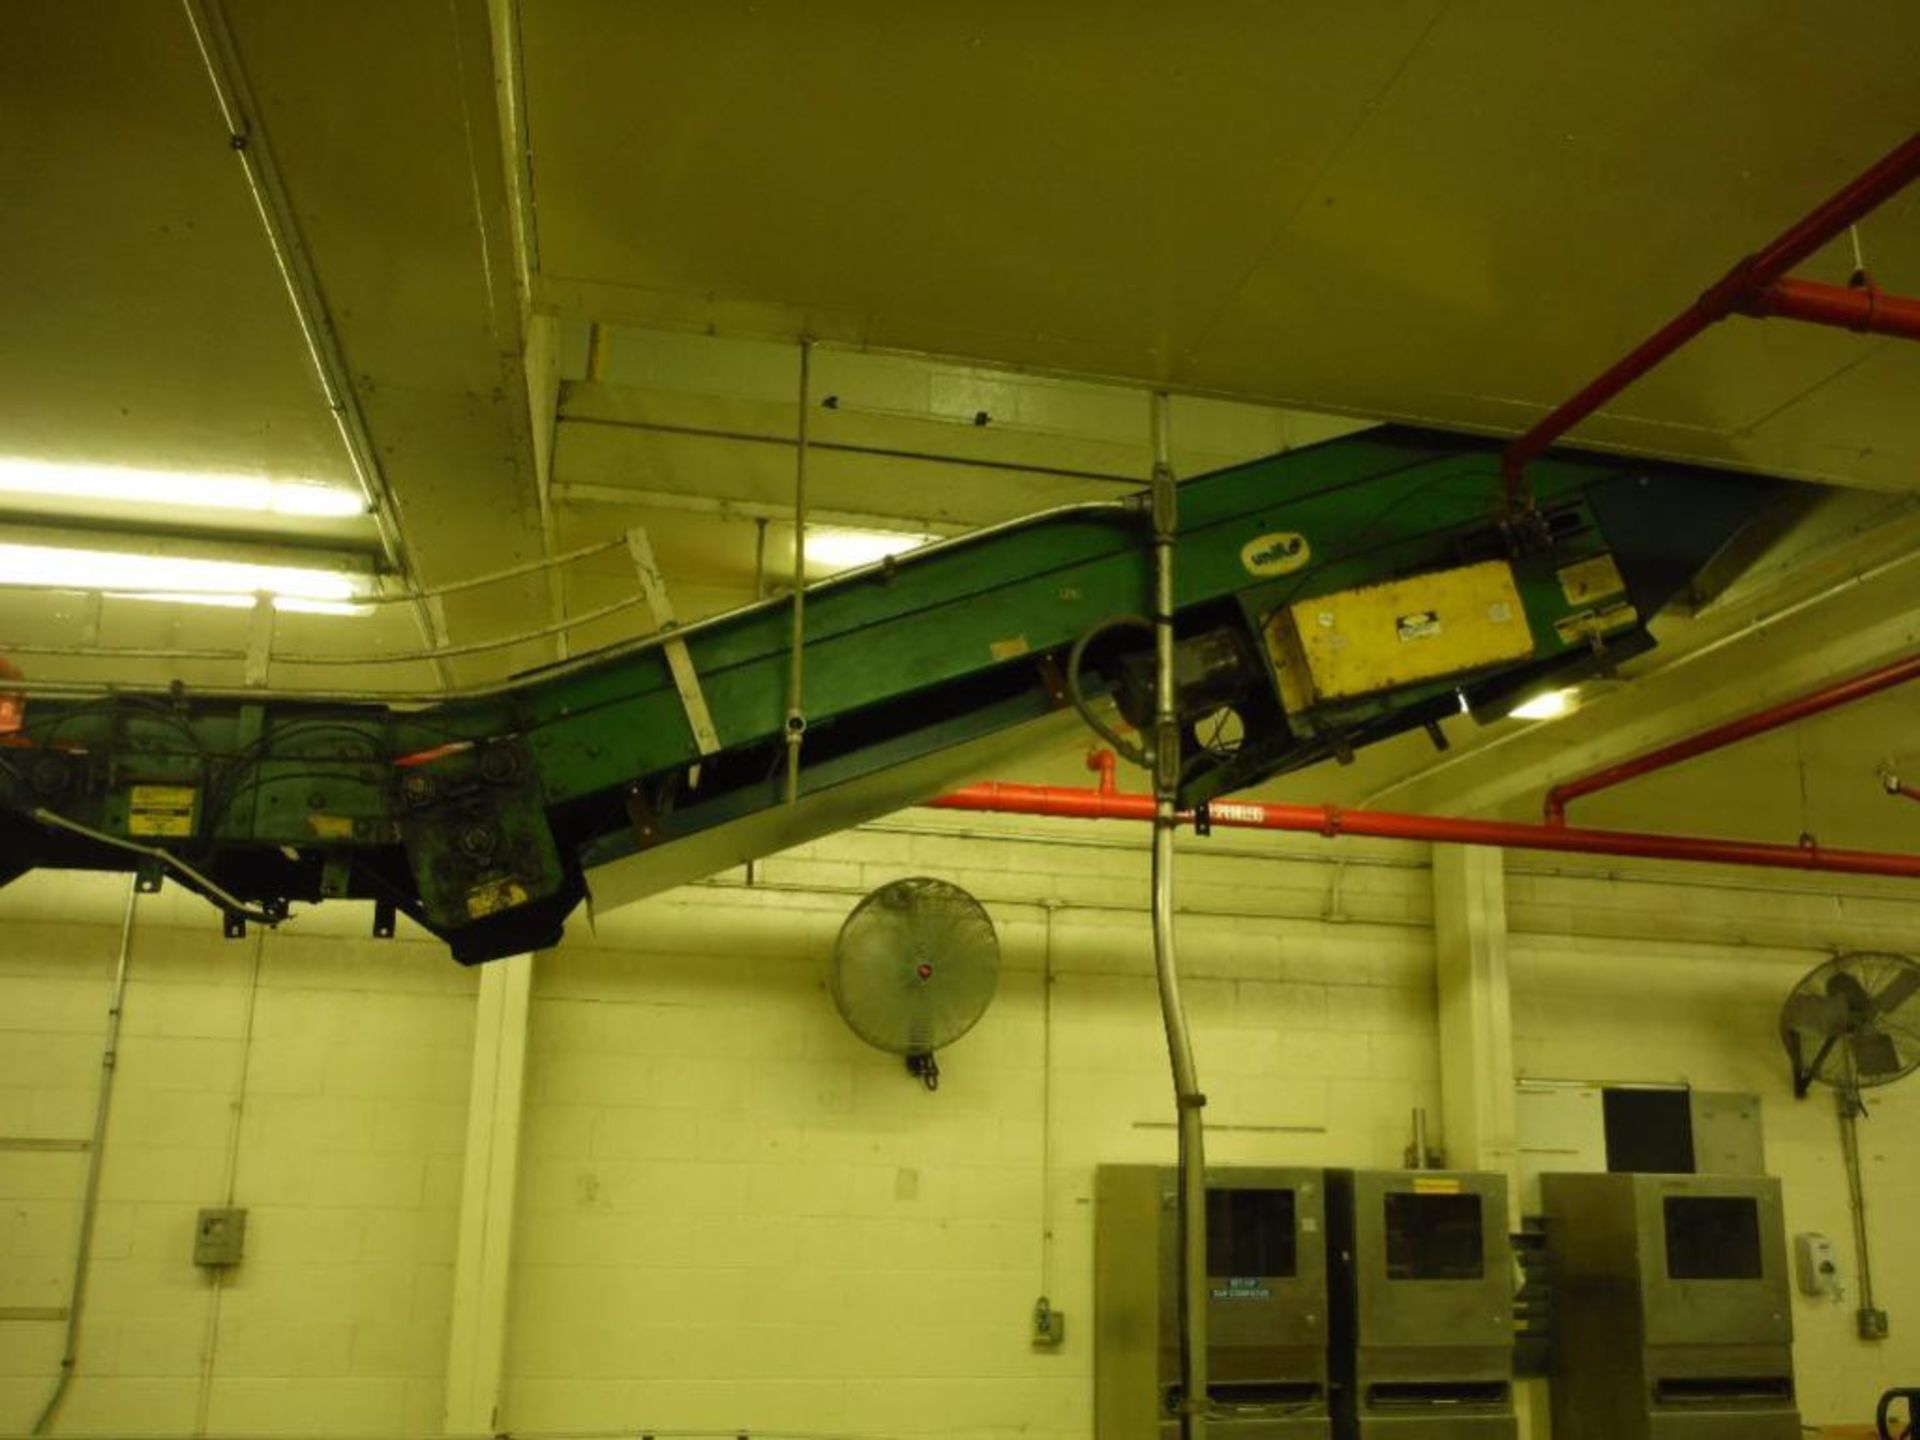 Uniflo decline rubber belt conveyor, 24 ft. long x 24 in. wide, motor and drive, mild steel frame, - Image 3 of 4